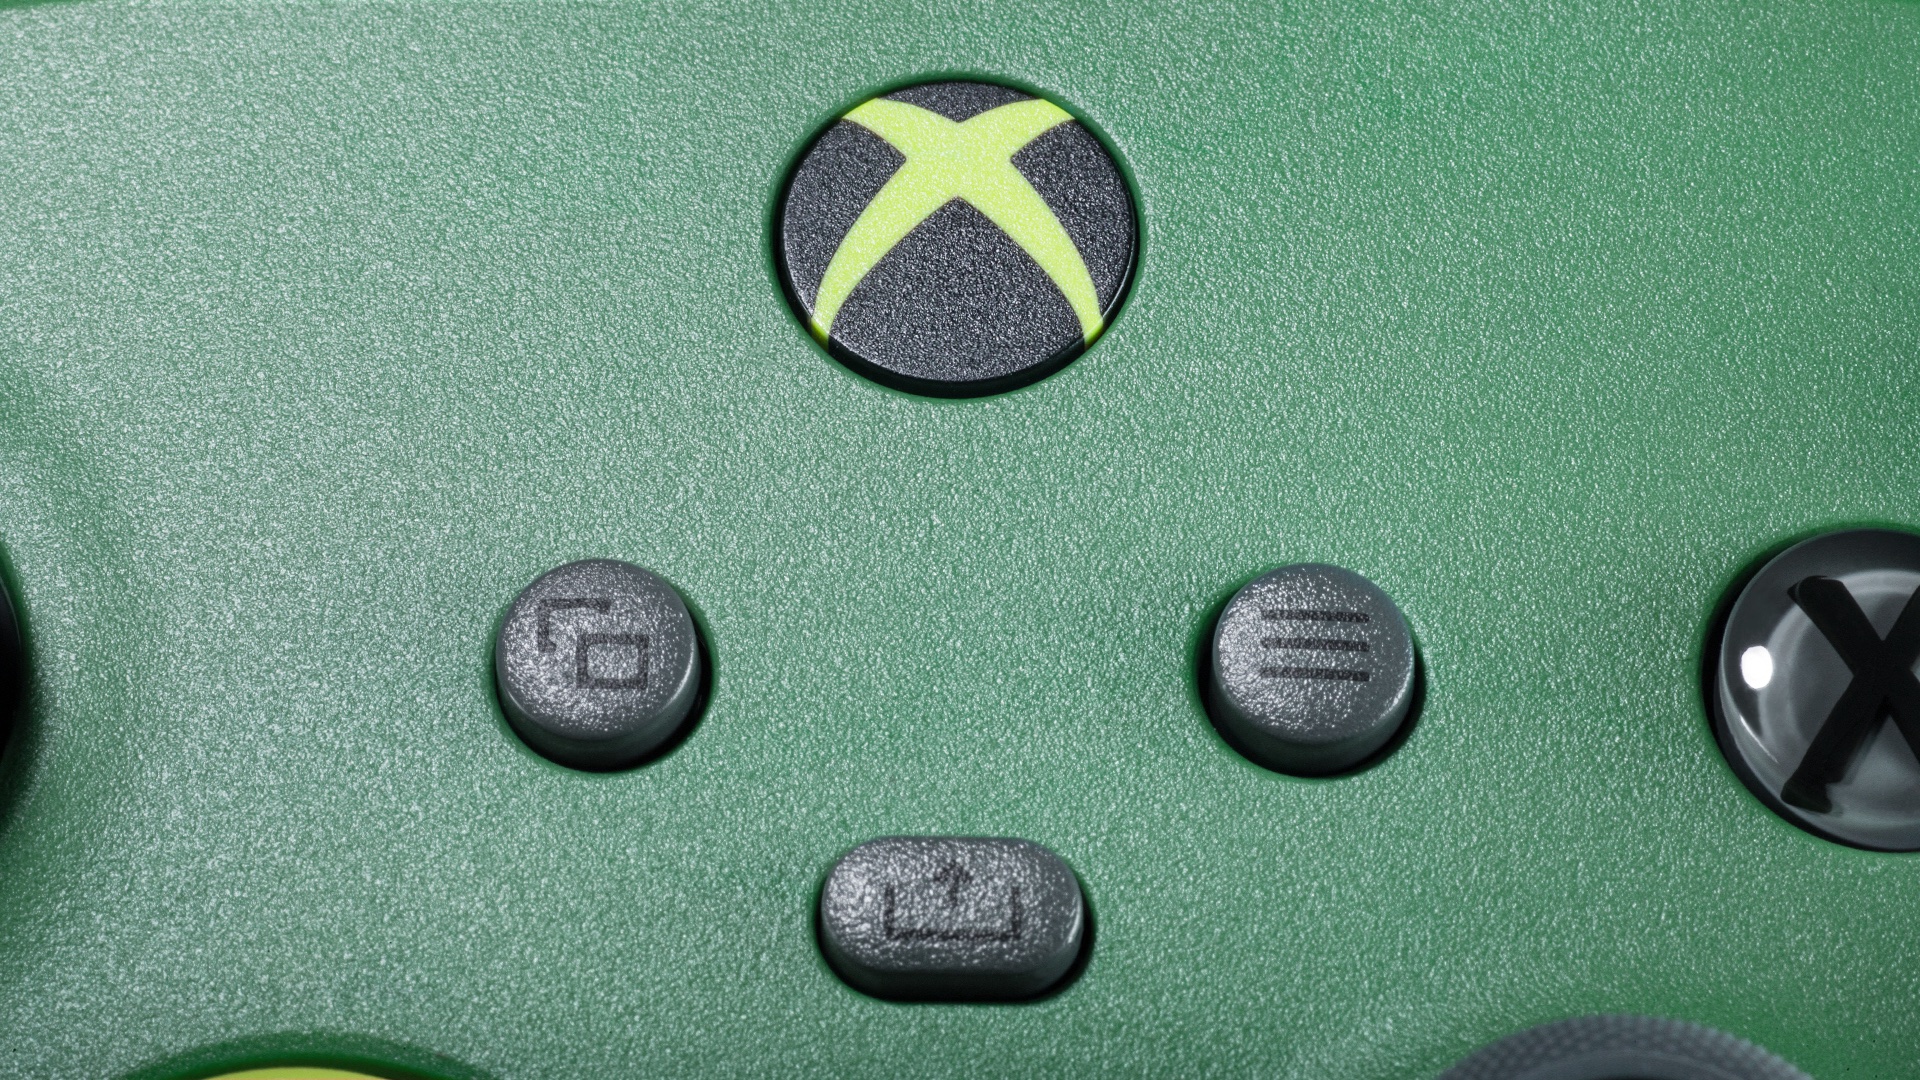 Microsoft reorganizes Xbox gaming leadership, Matt Booty and Sarah Bond  grab promotions